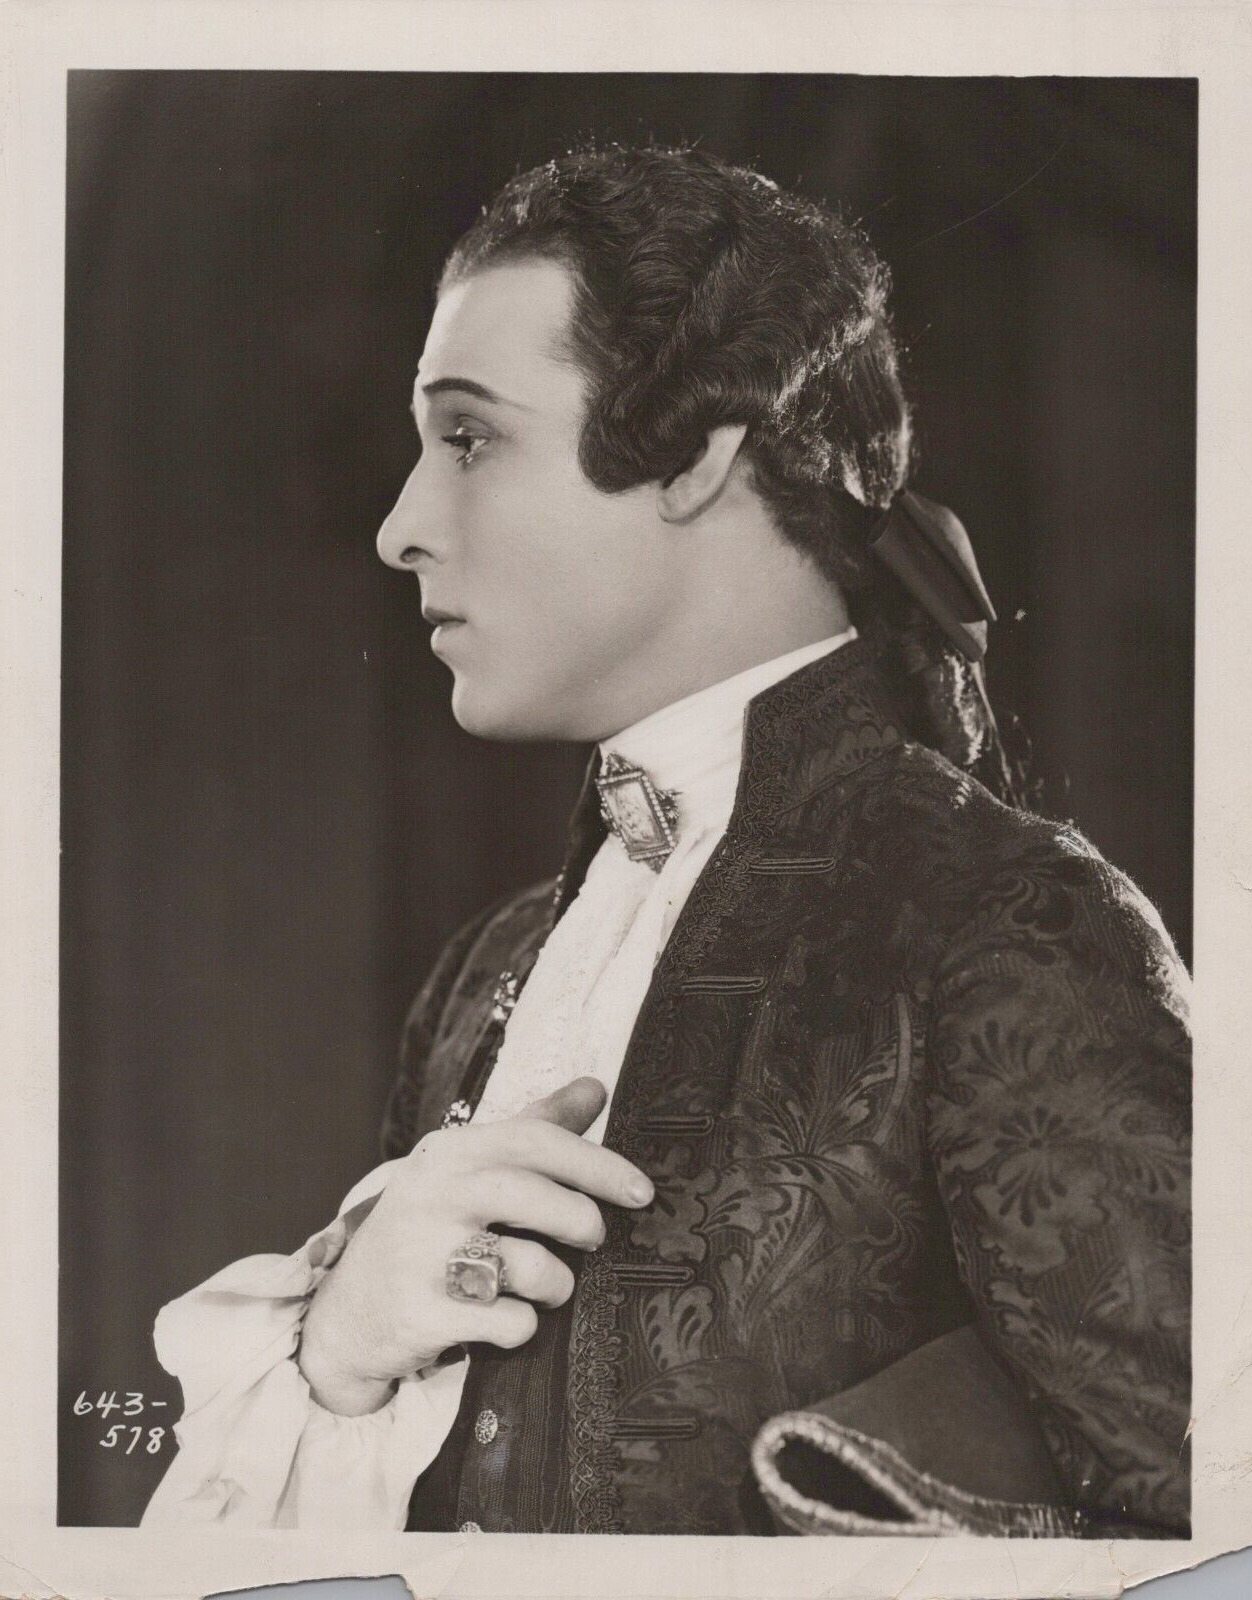 HOLLYWOOD GAY INTEREST Rudolph Valentino HANDSOME PORTRAIT 1930s Photo C23